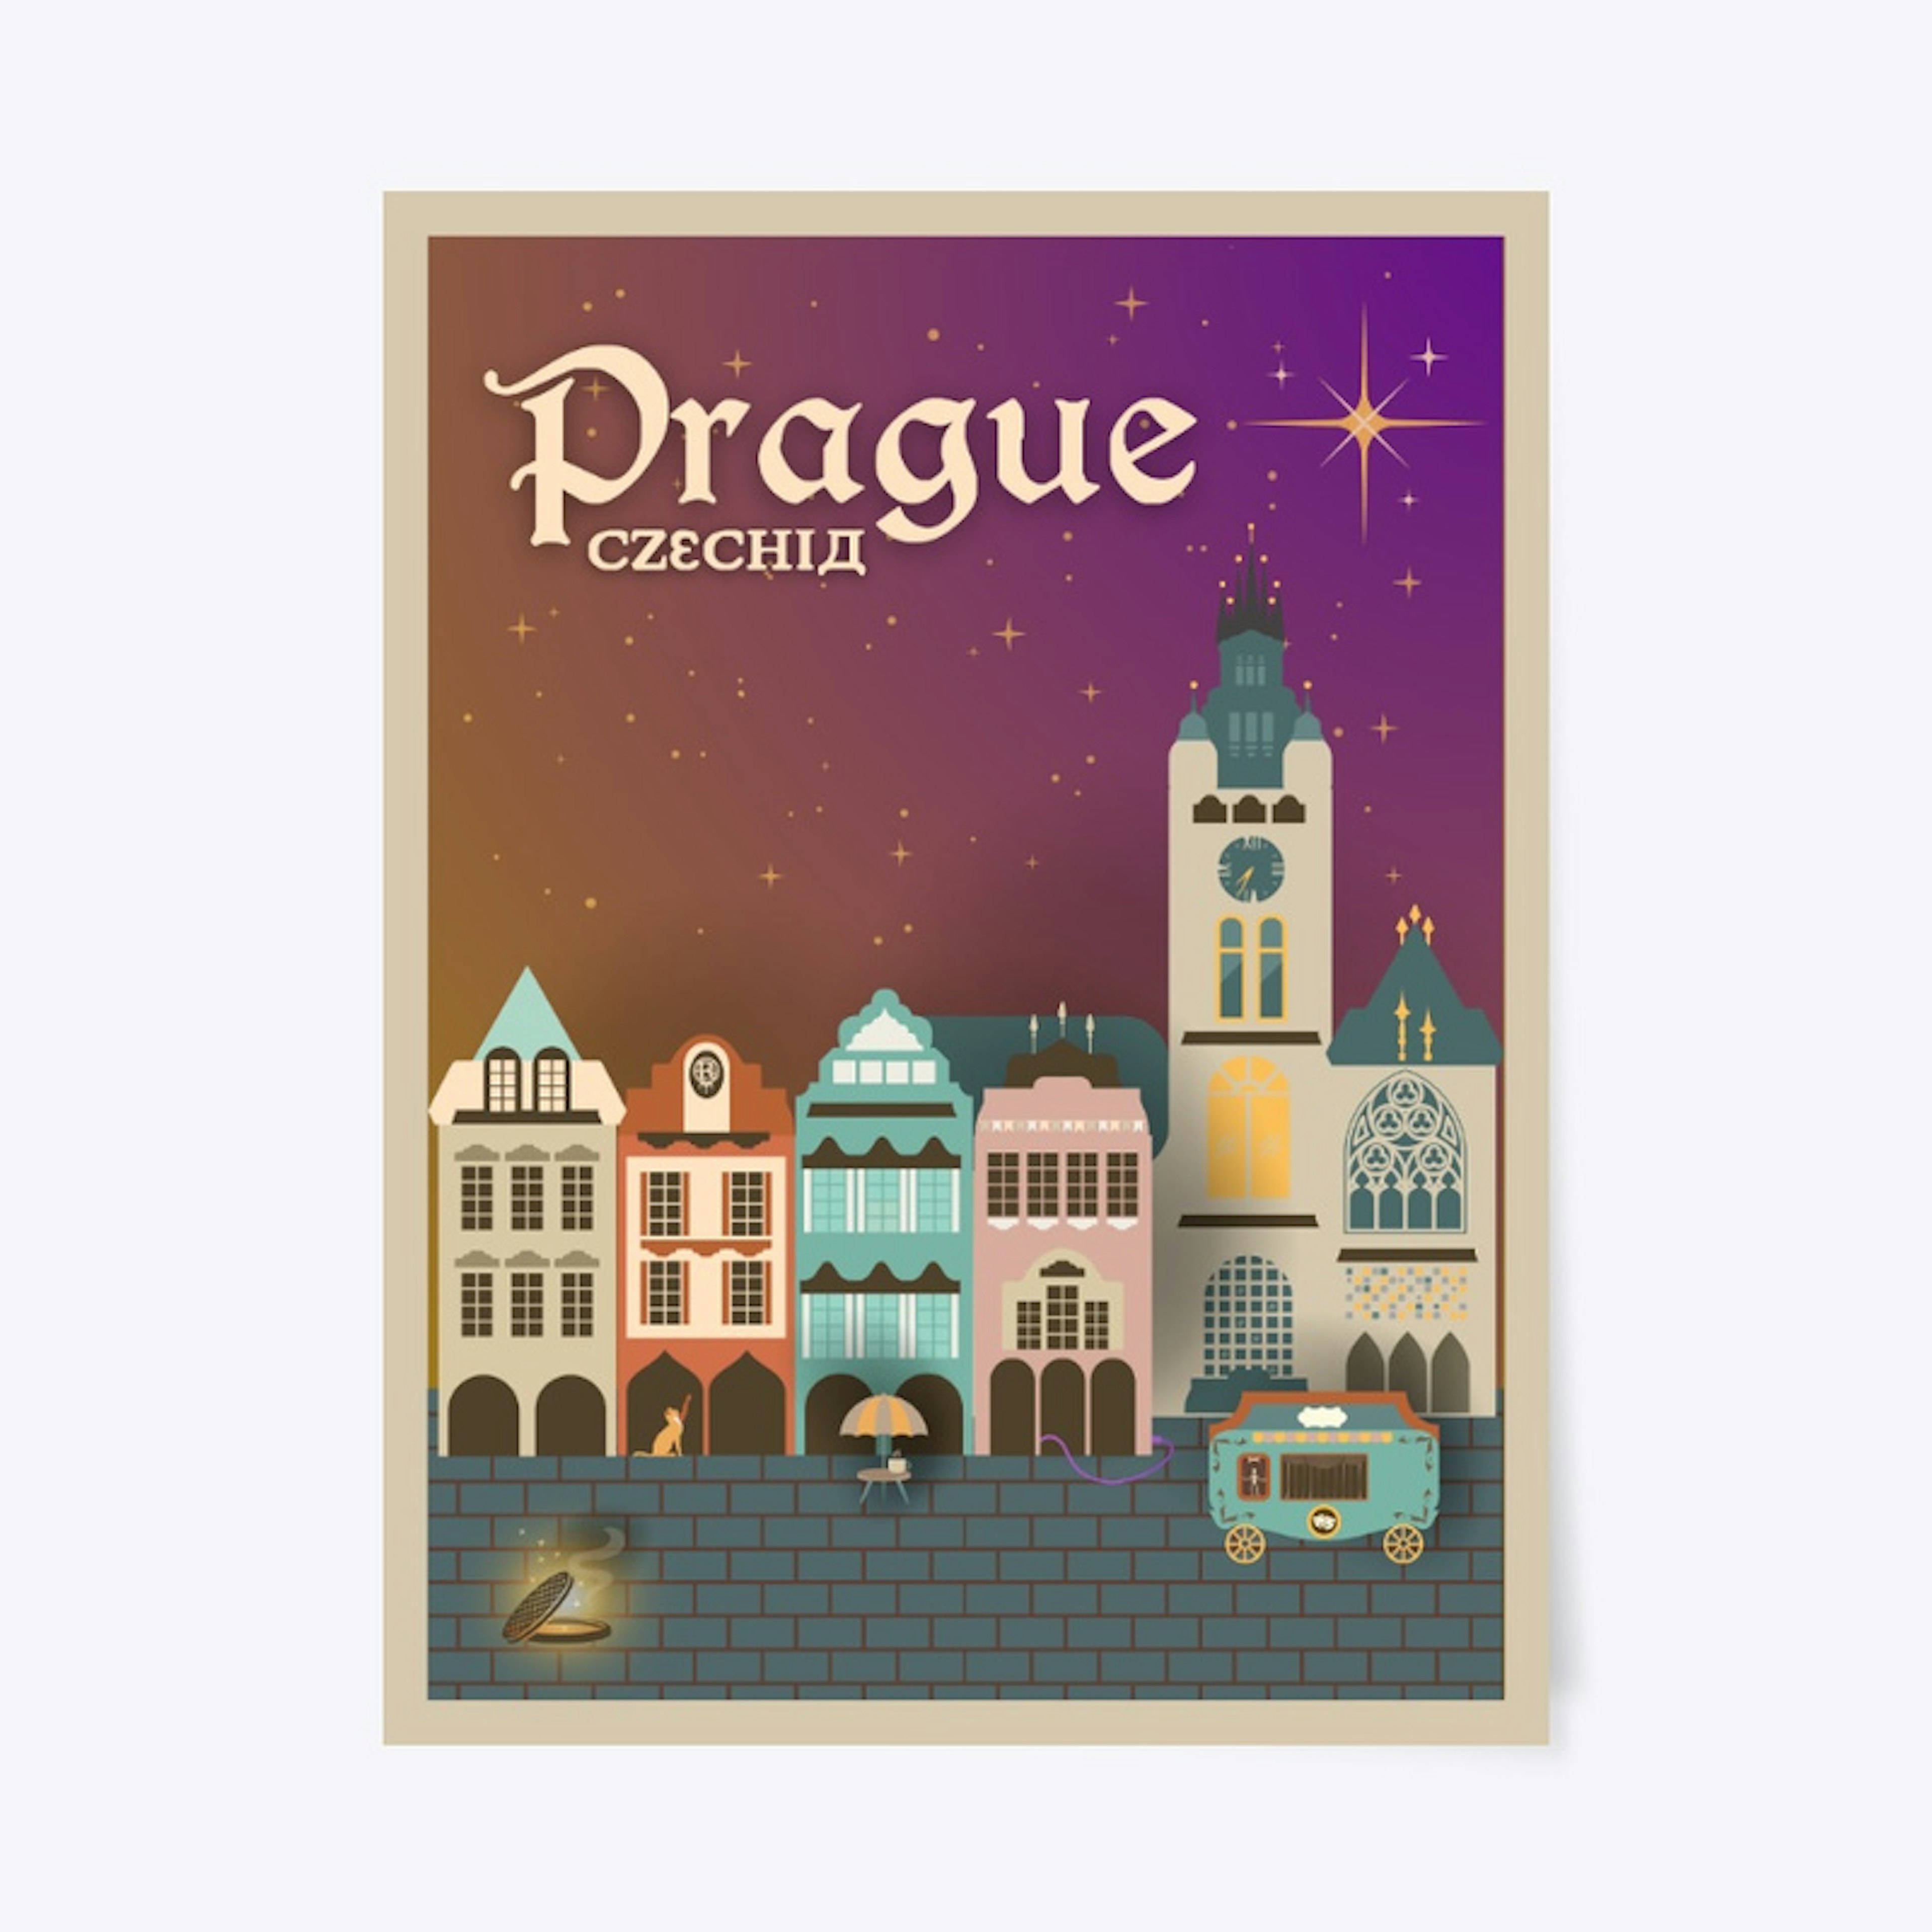 Nancy's Travels - Prague